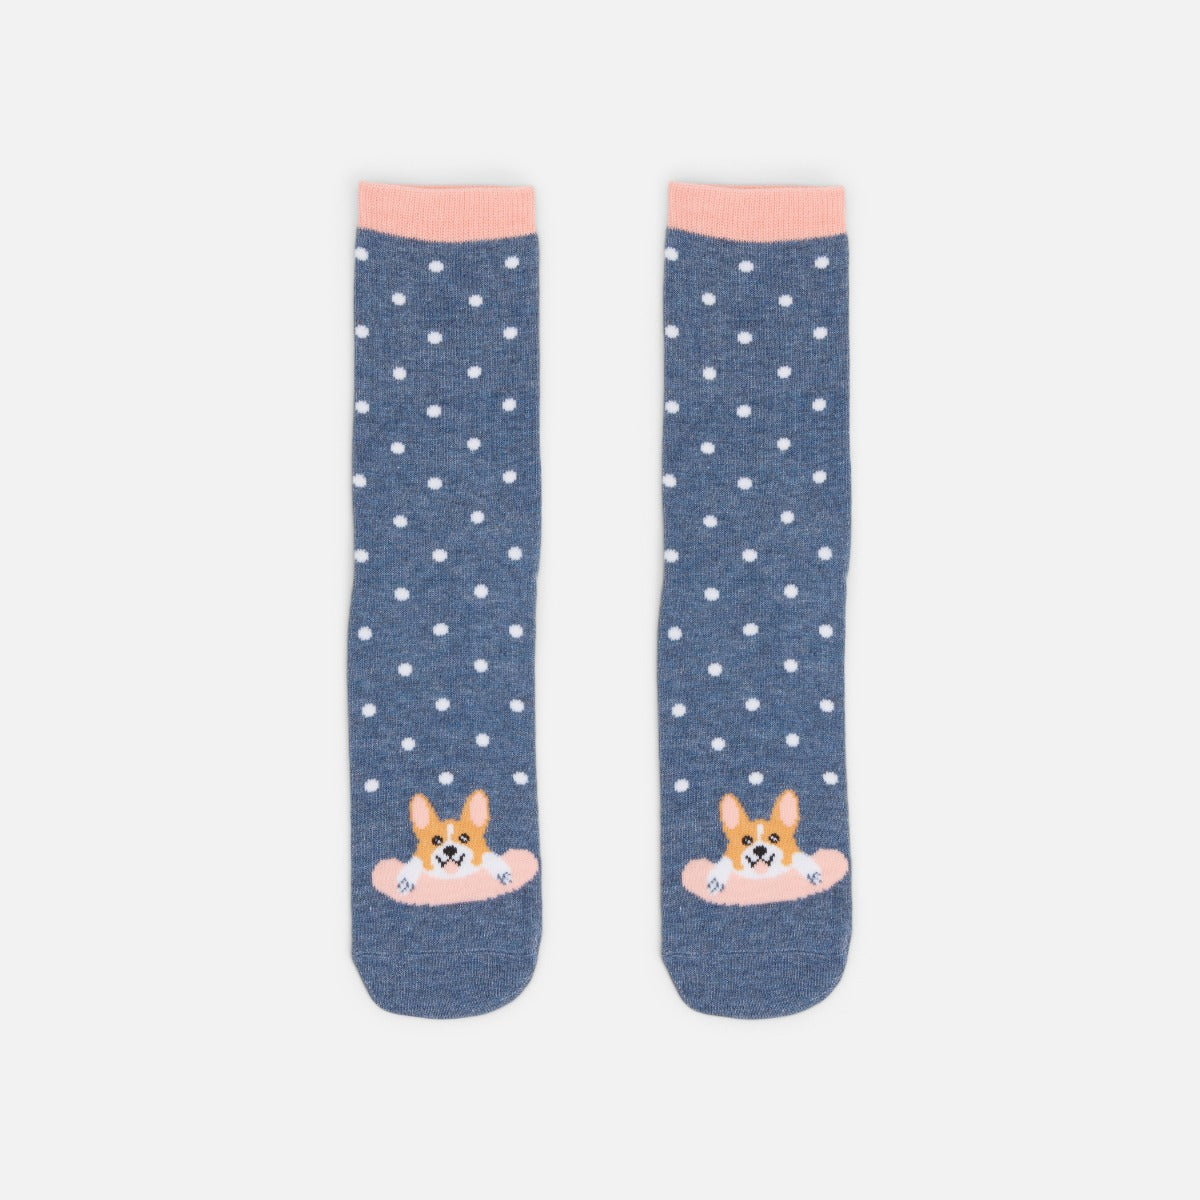 Denim blue socks with white polka dots and dog